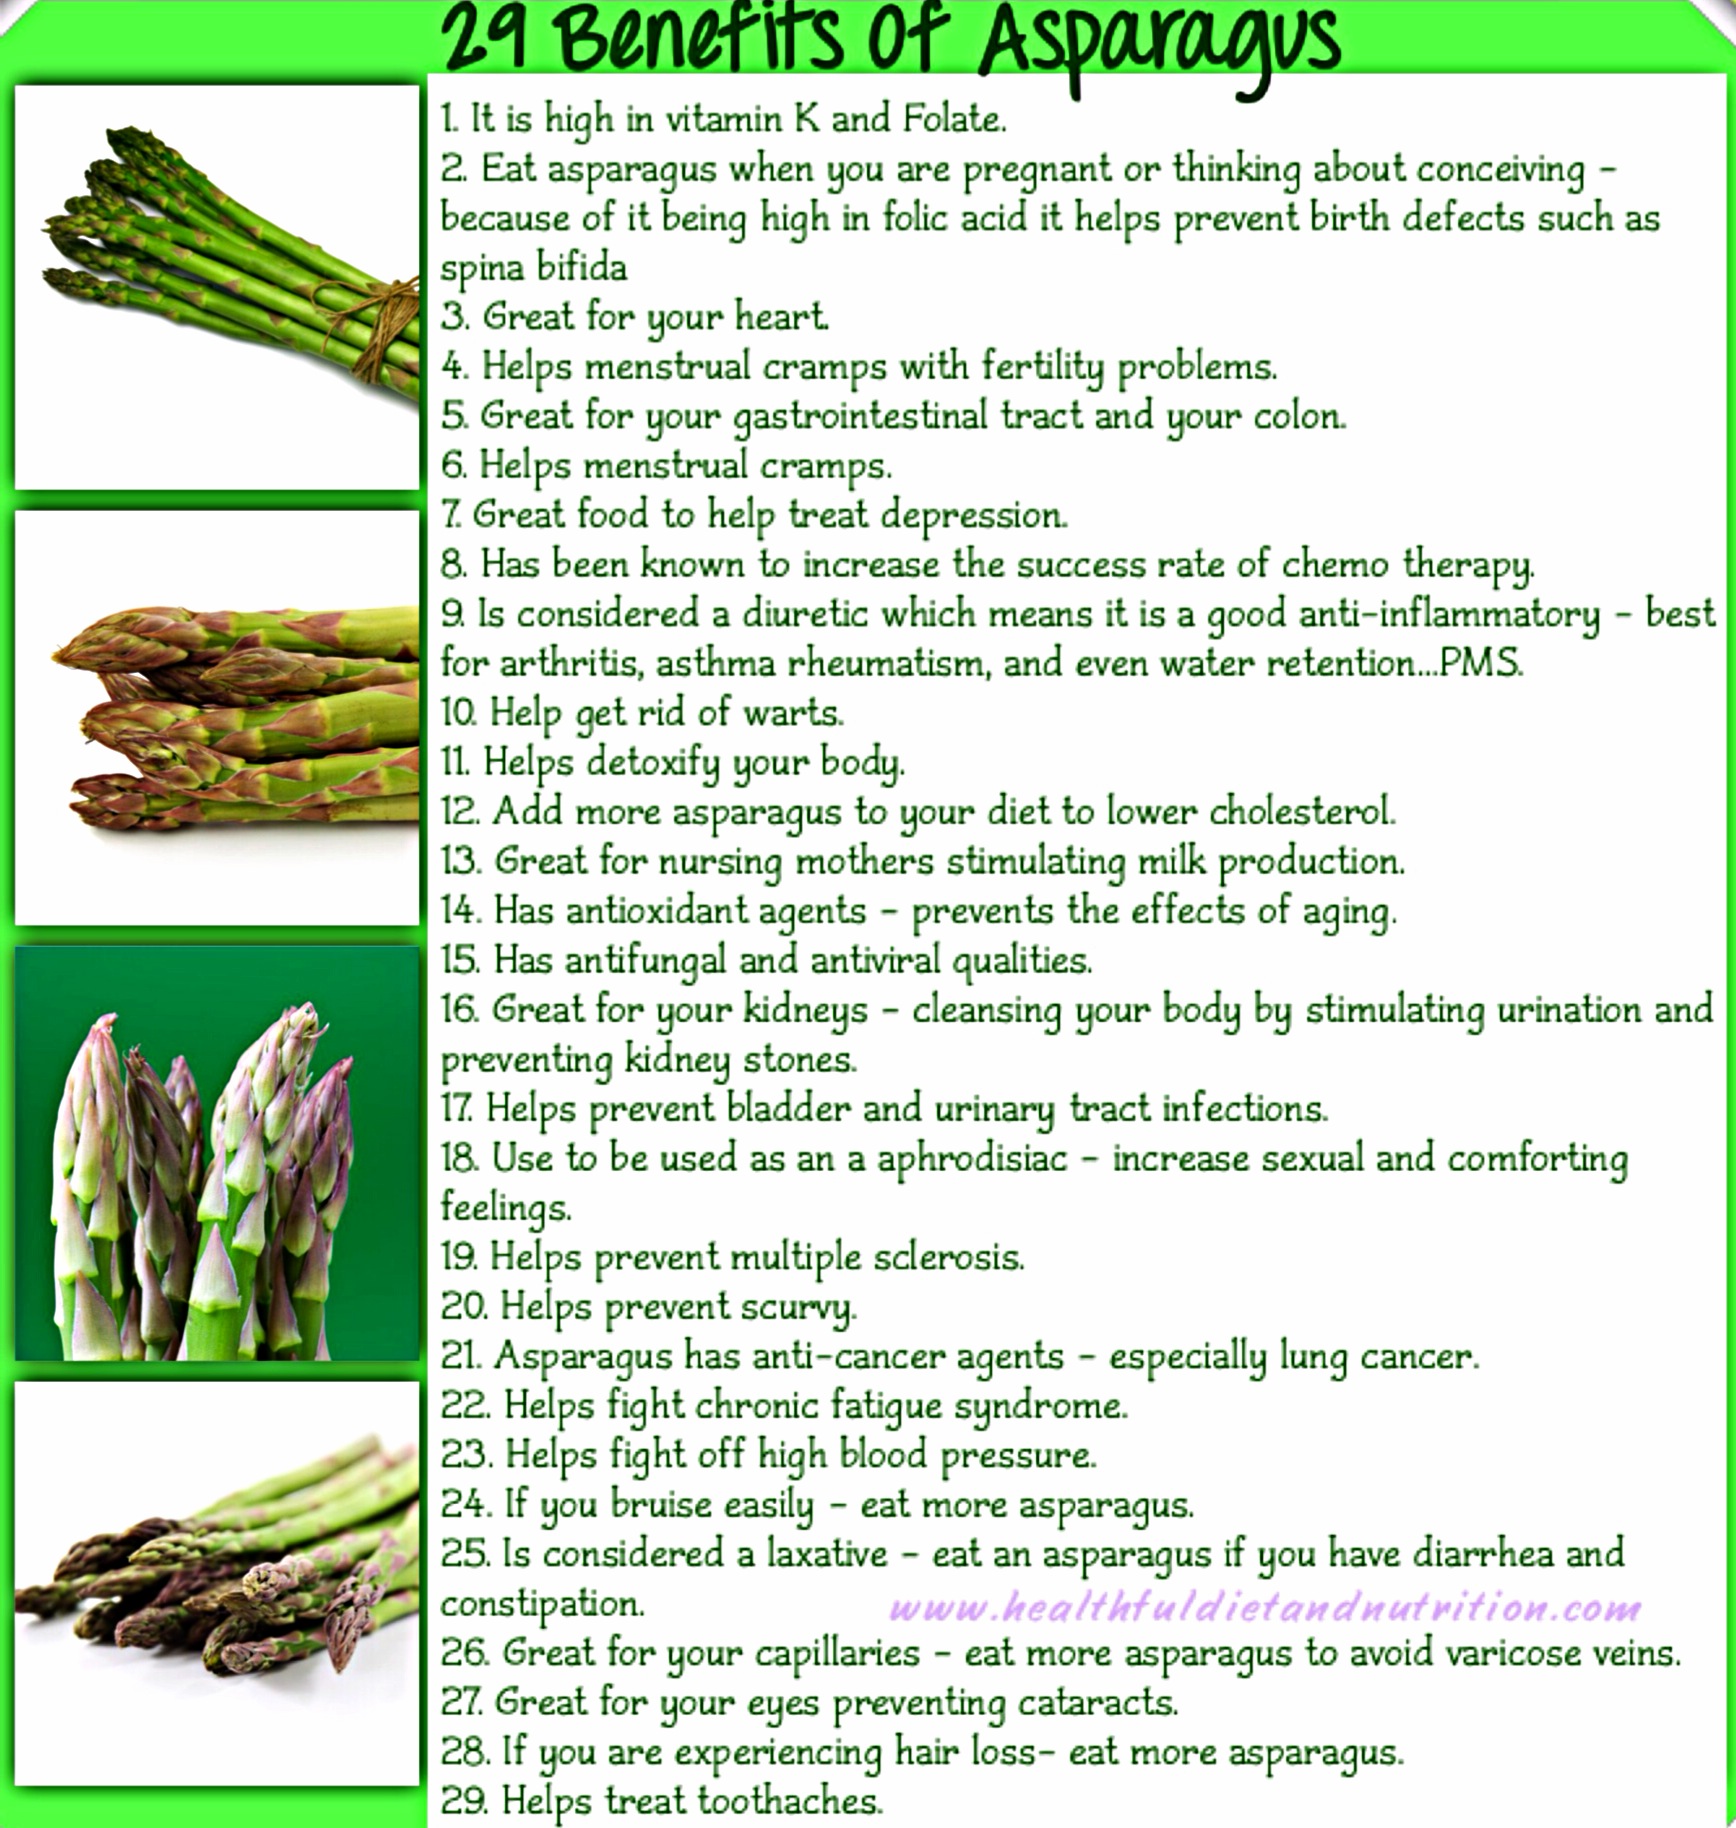 29 Benefits of Asparagus